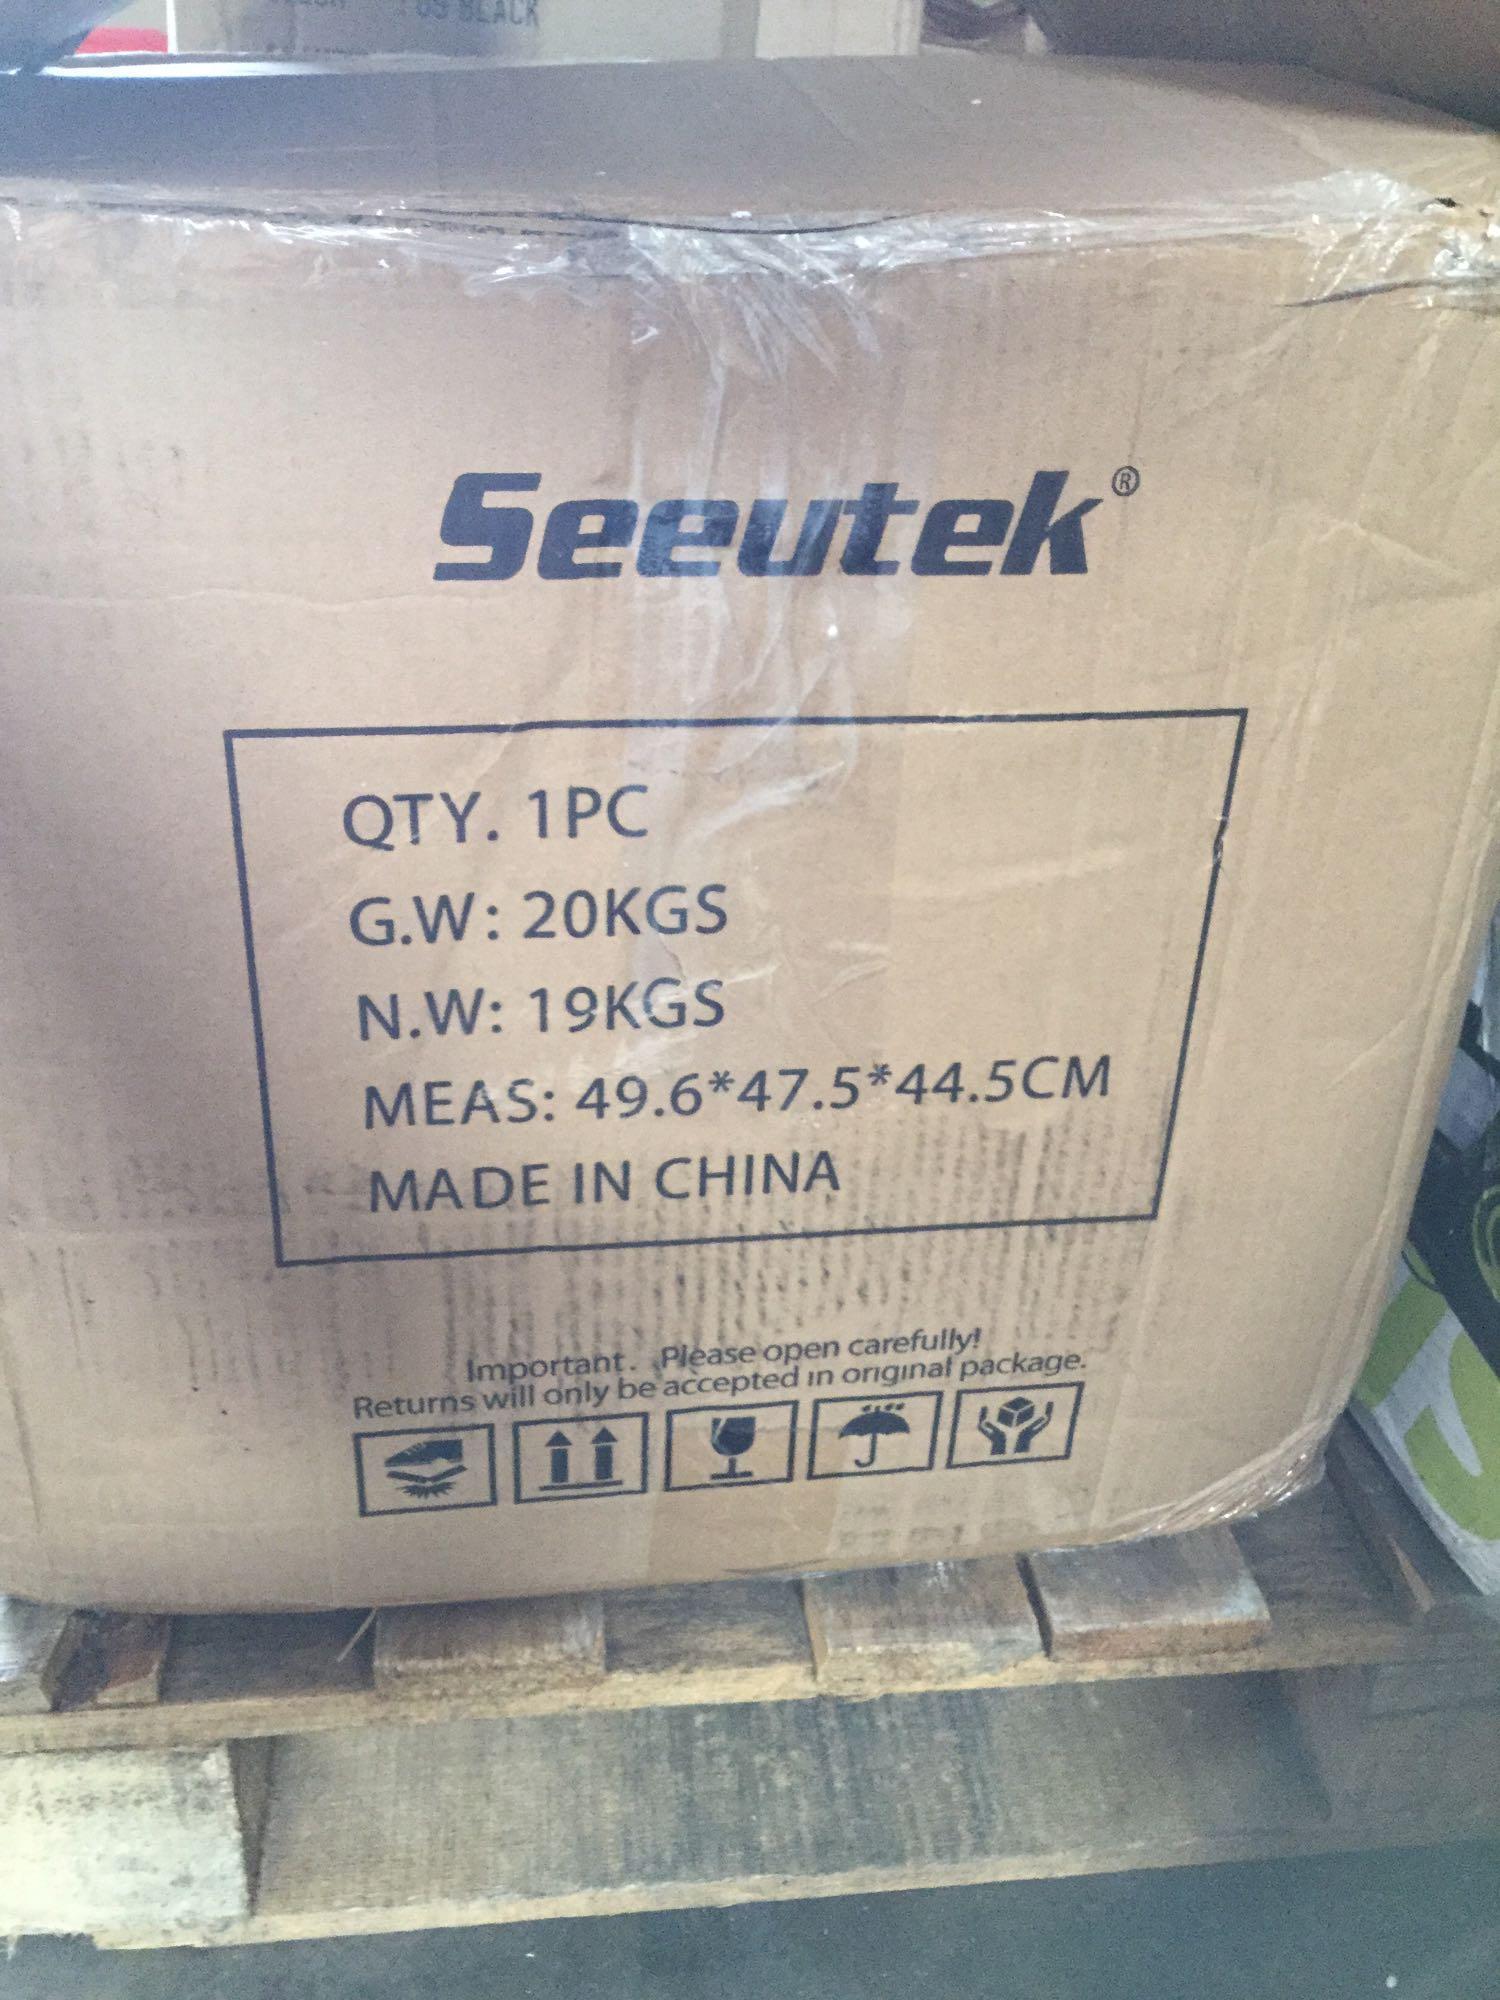 Seeutek 5 in 1 Heat Press Machine 12"x 15" Inch Professional Digital Transfer Sublimation